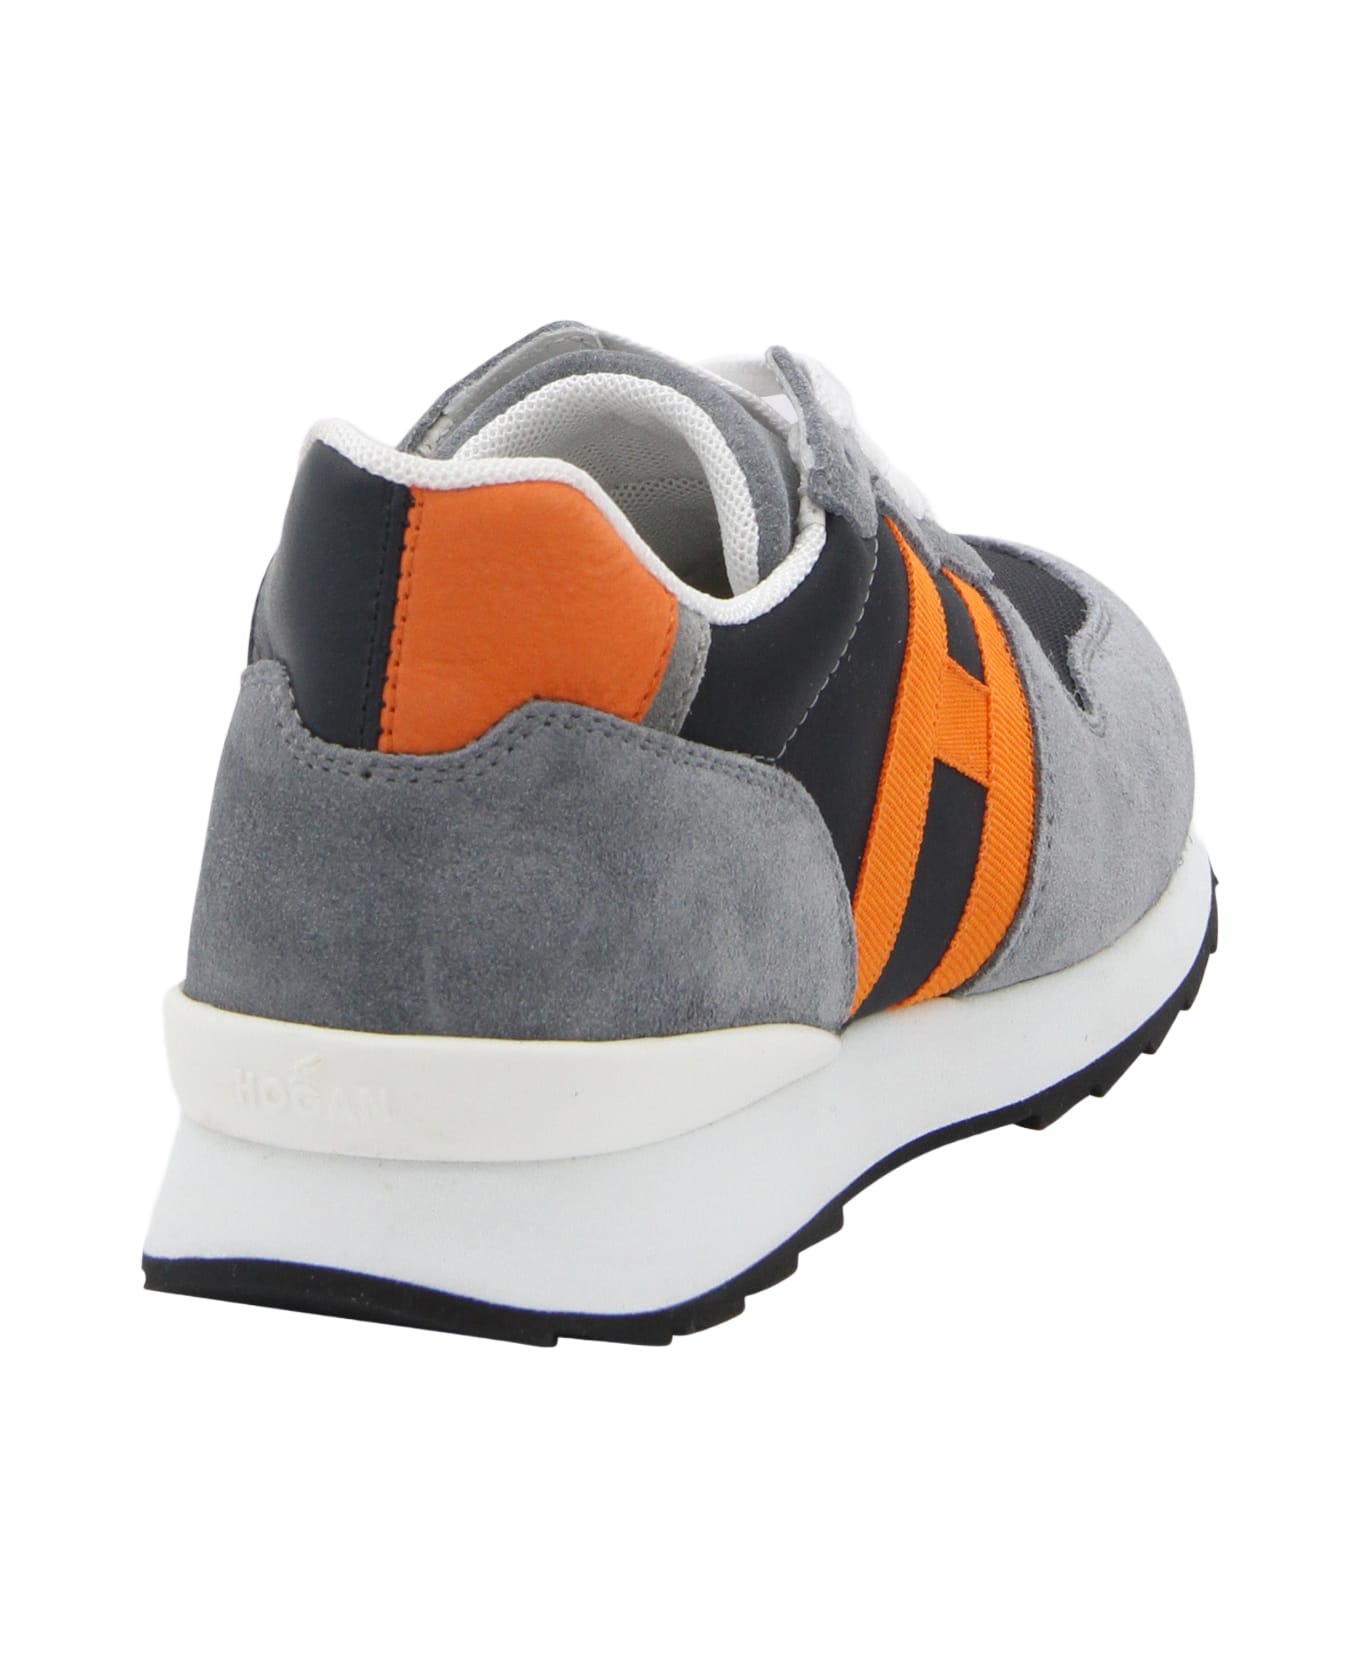 Hogan Grey-orange Leather Sneakers - GREY ORANGE